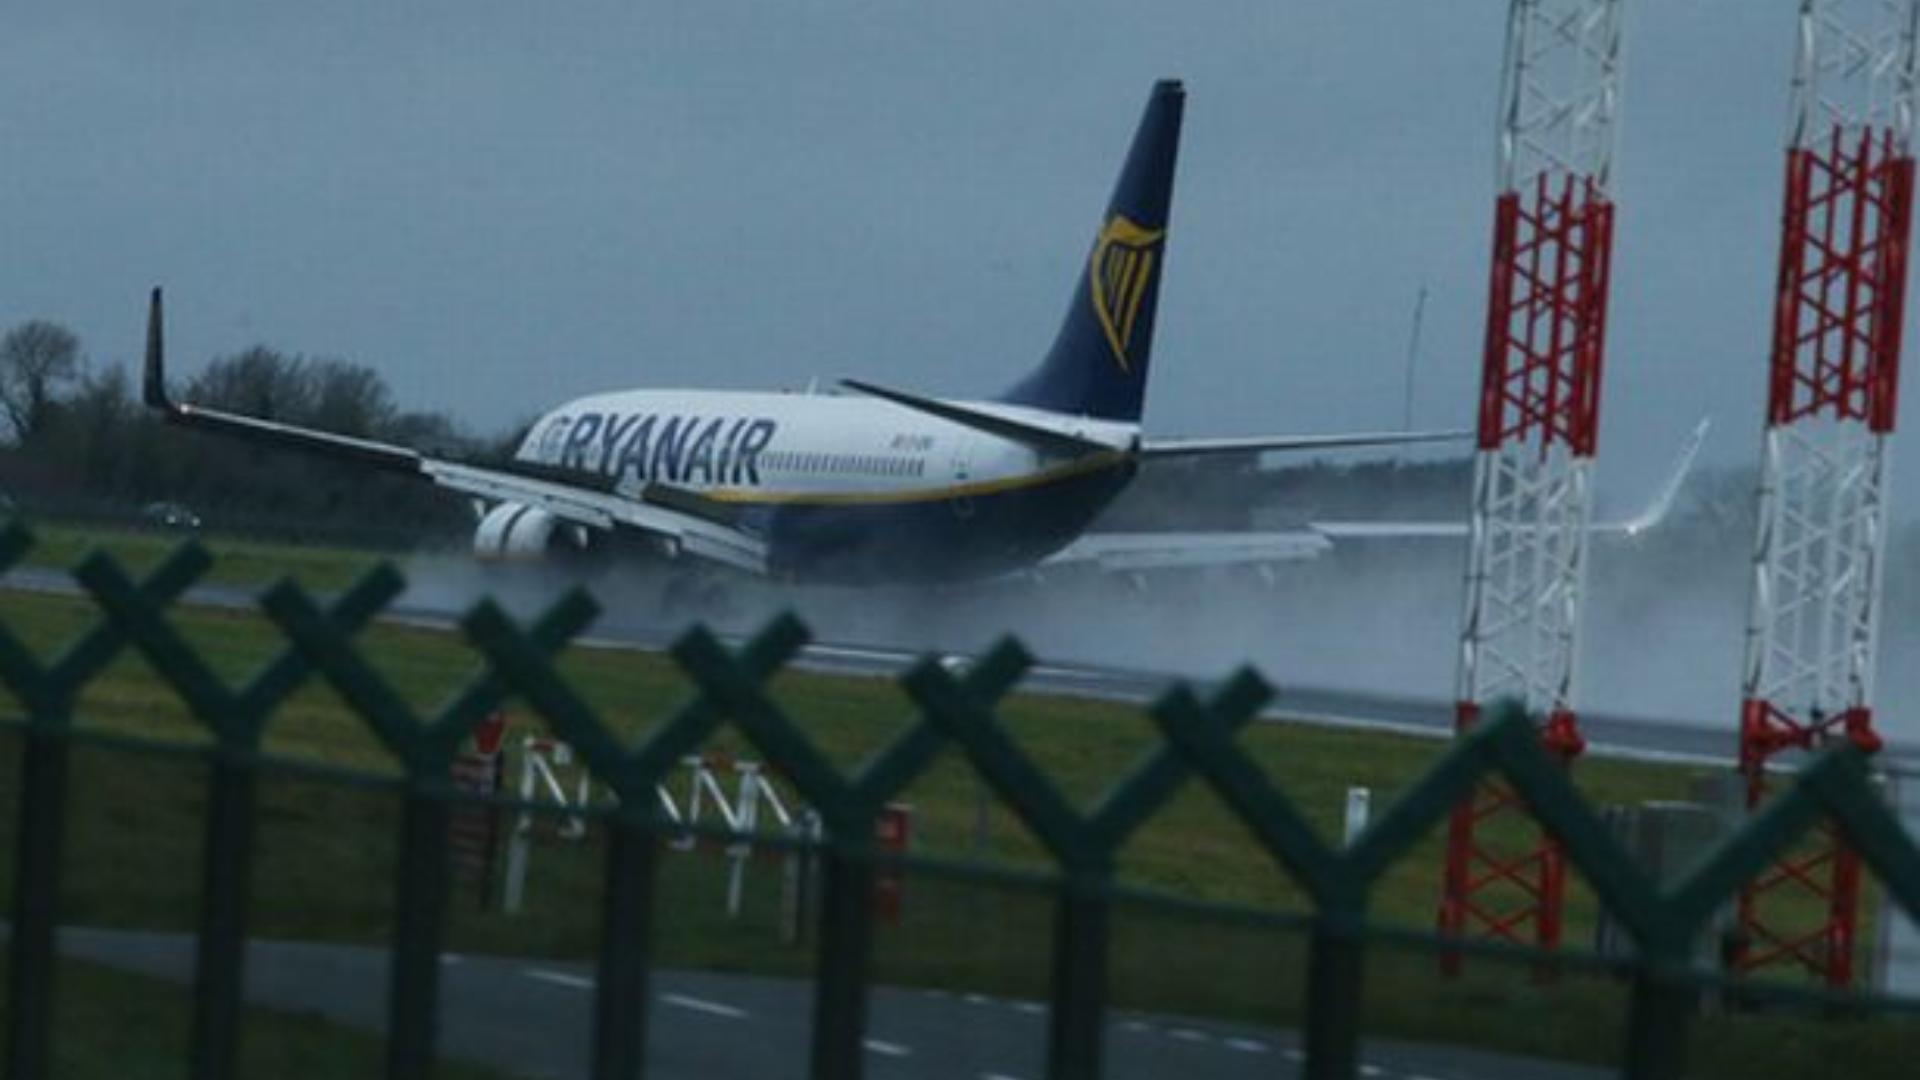 Storm Isha: Over 100 flights cancelled at Dublin Airport